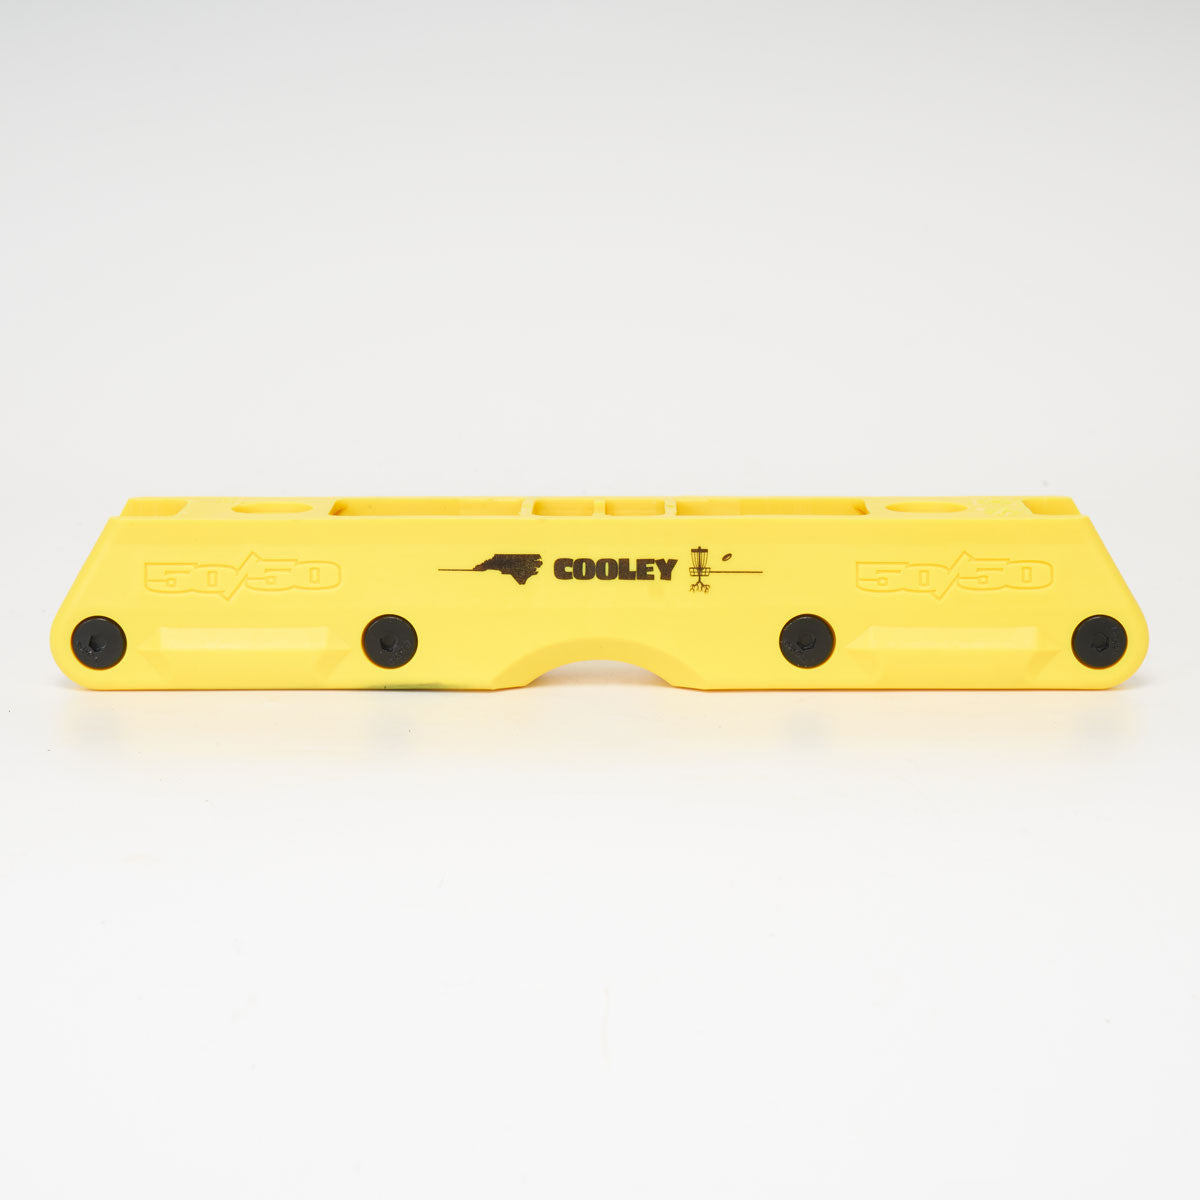 Fifty-50 Jon Cooley Balance Frames Yellow